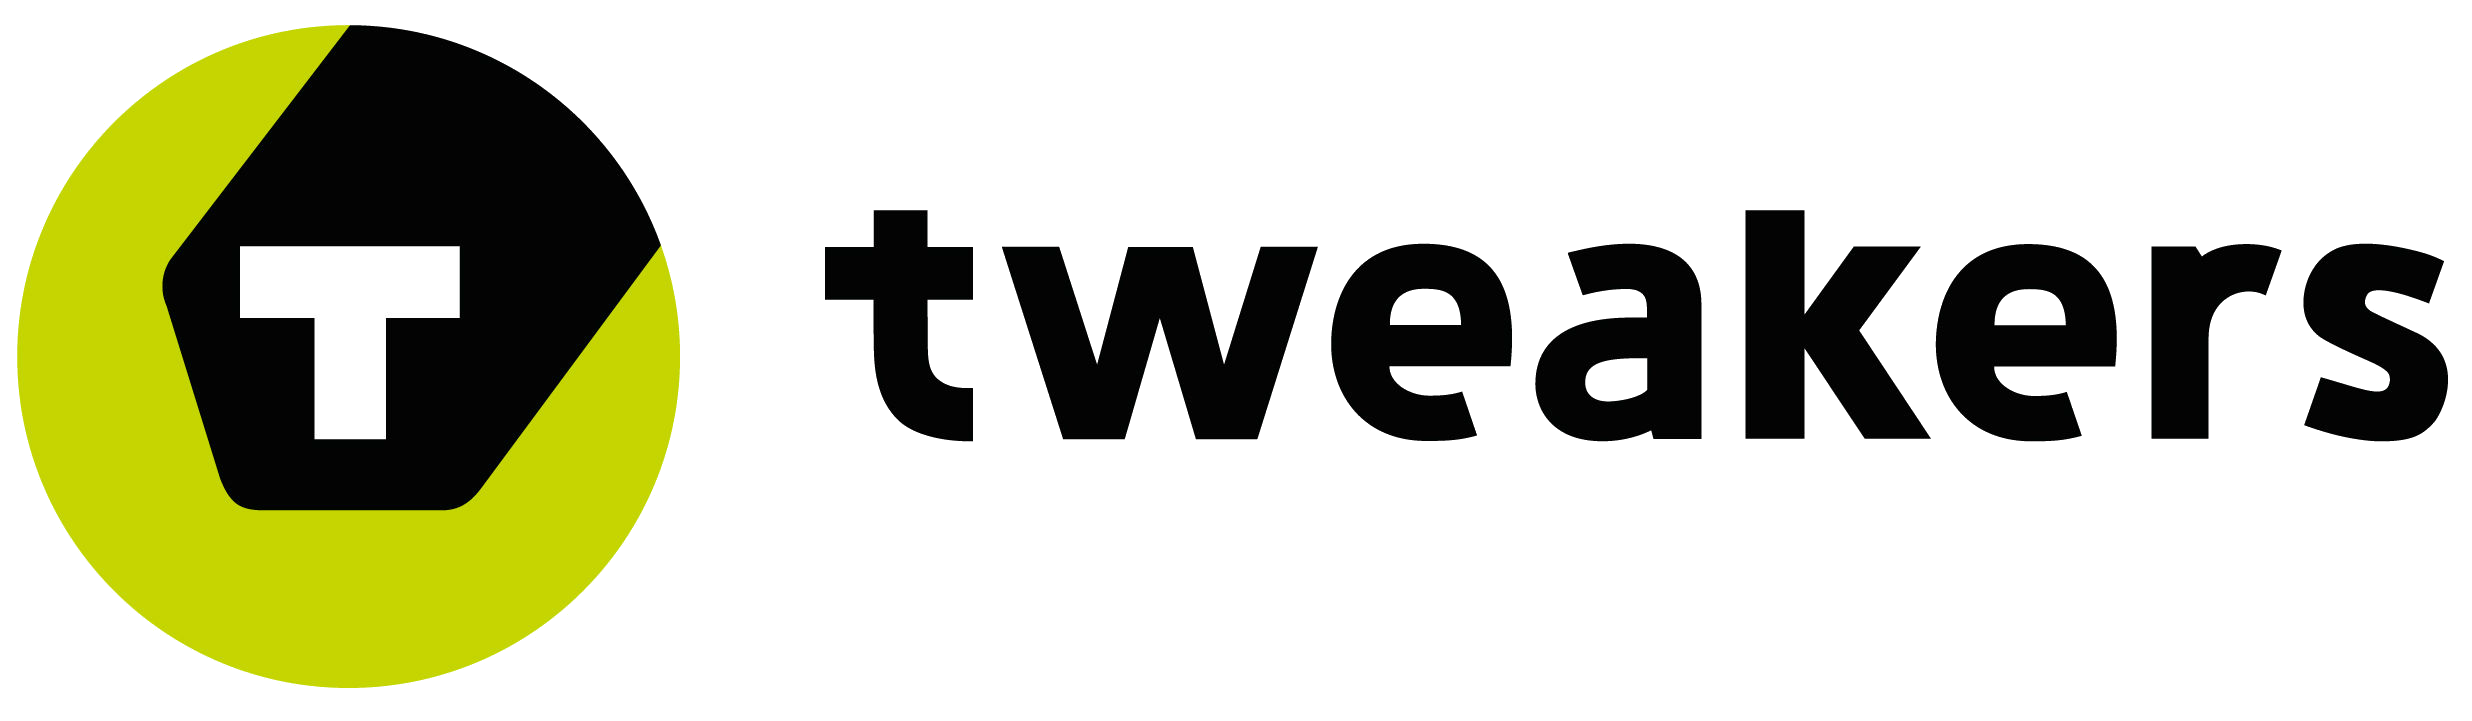 tweakers logo vector.png